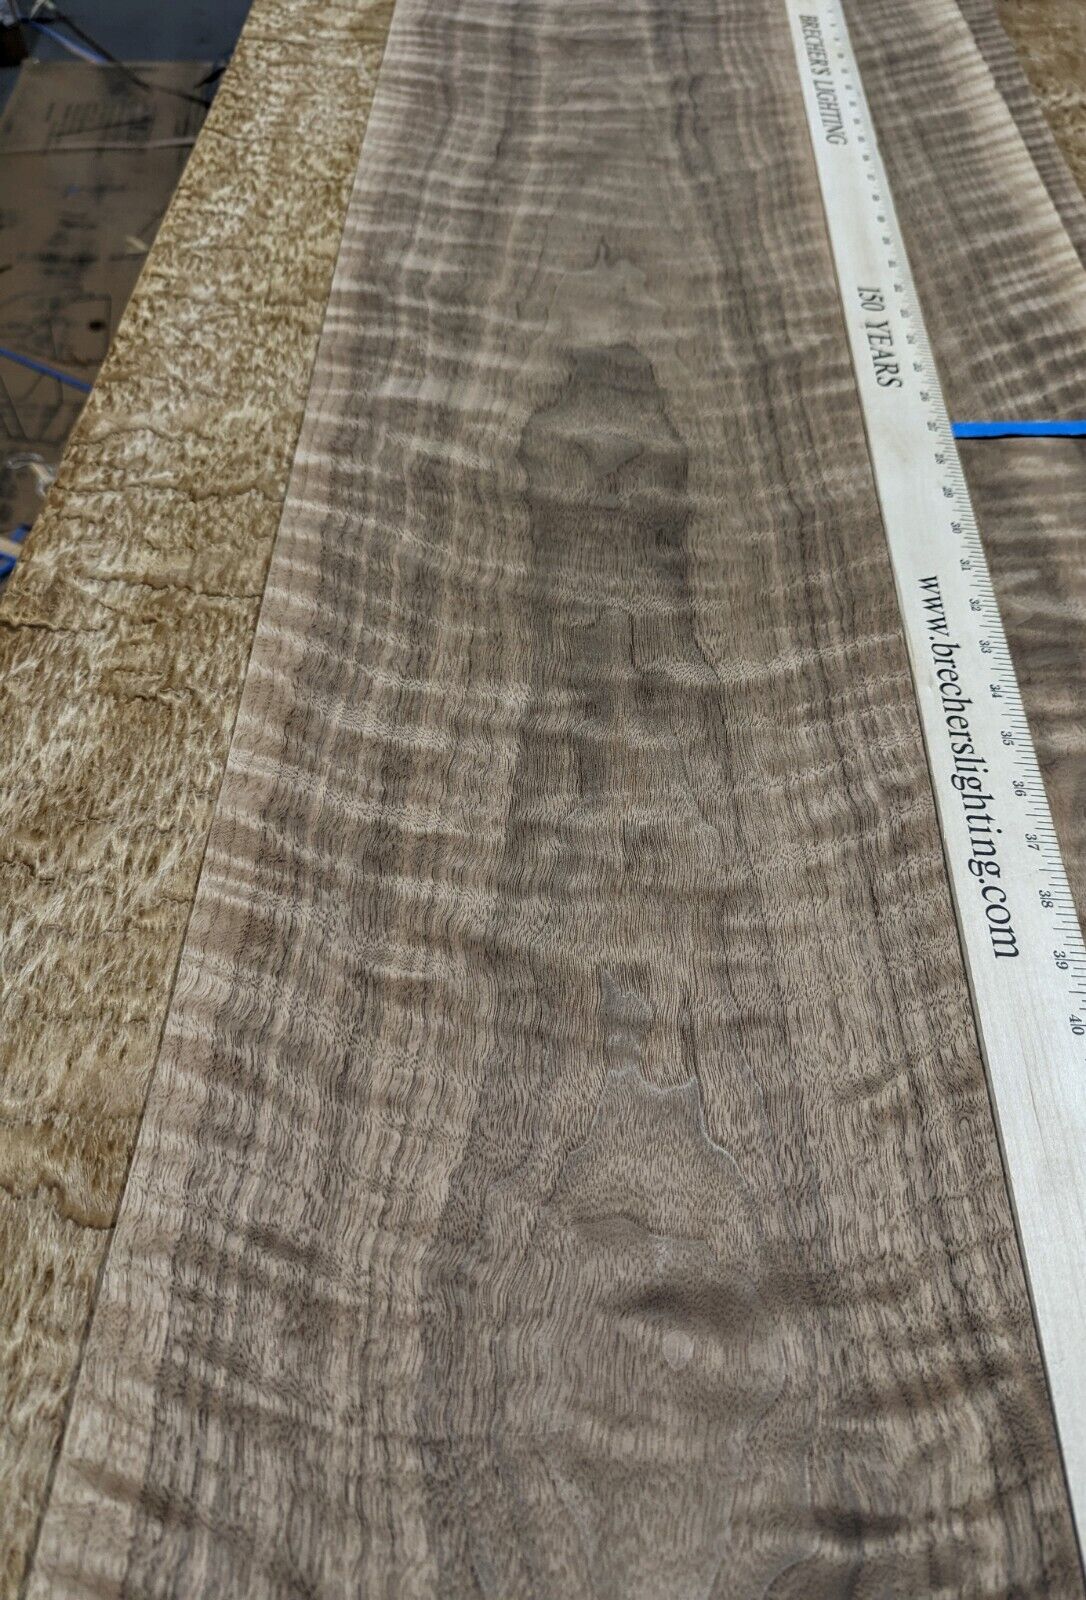 Walnut Figured Flat Cut wood veneer 15\